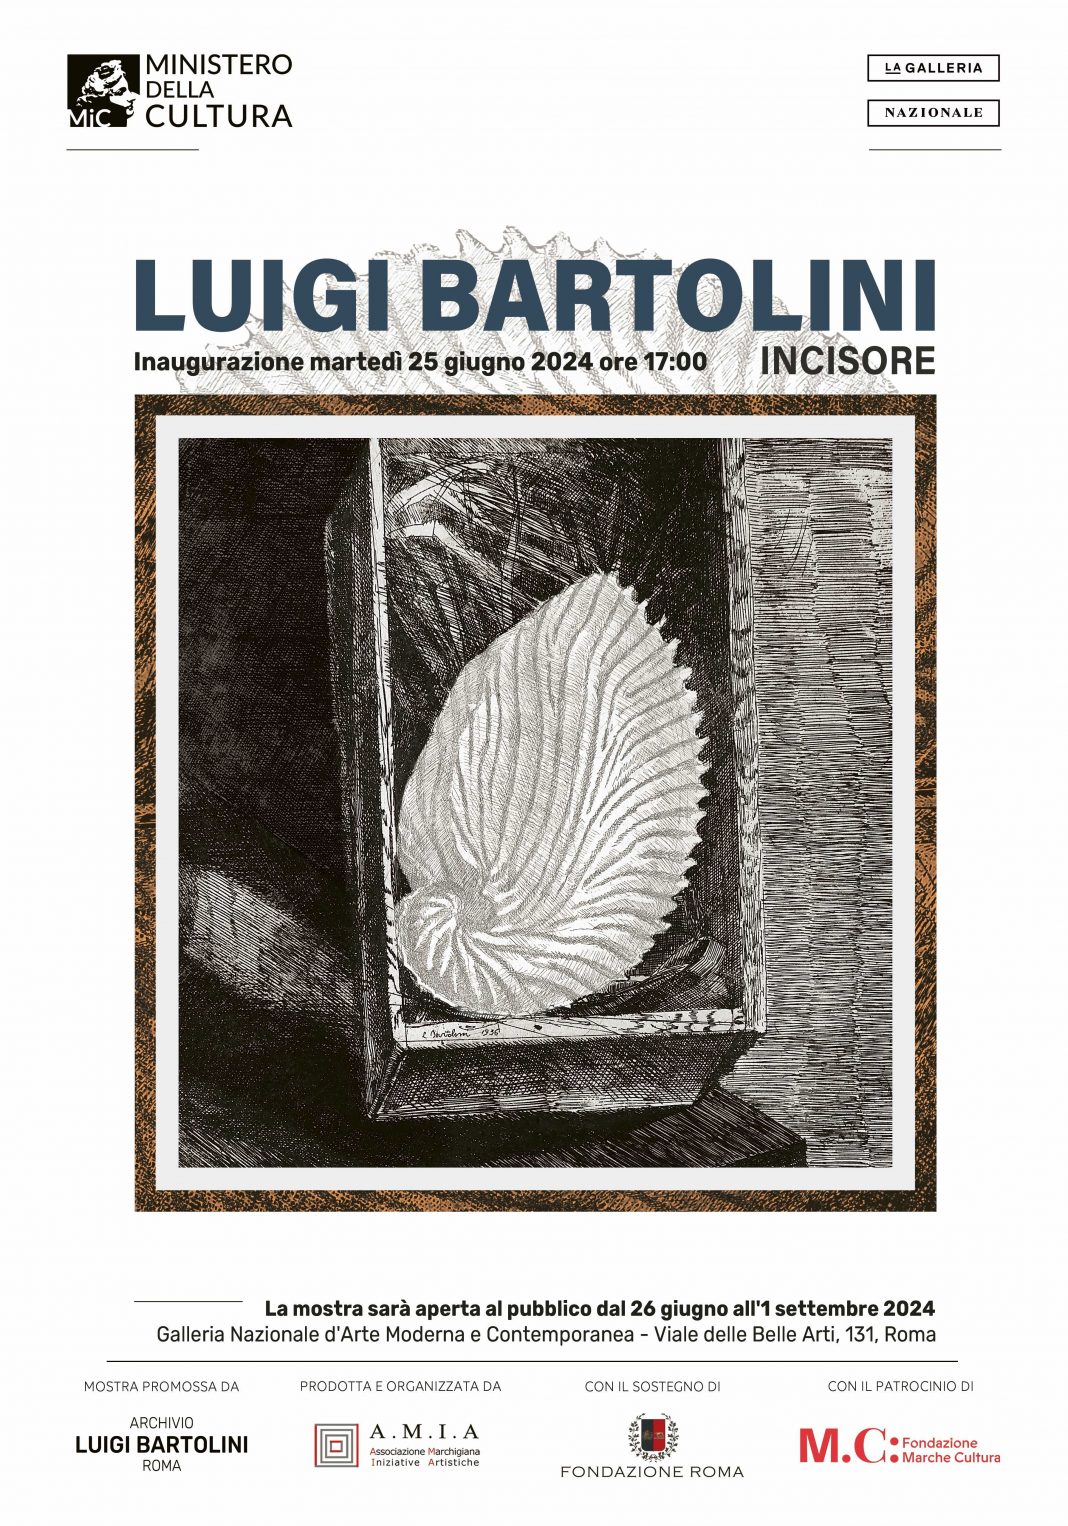 Luigi Bartolini incisorehttps://www.exibart.com/repository/media/formidable/11/img/46a/GNAM_Luigi-Bartolini-incisore_invito-1068x1526.jpg